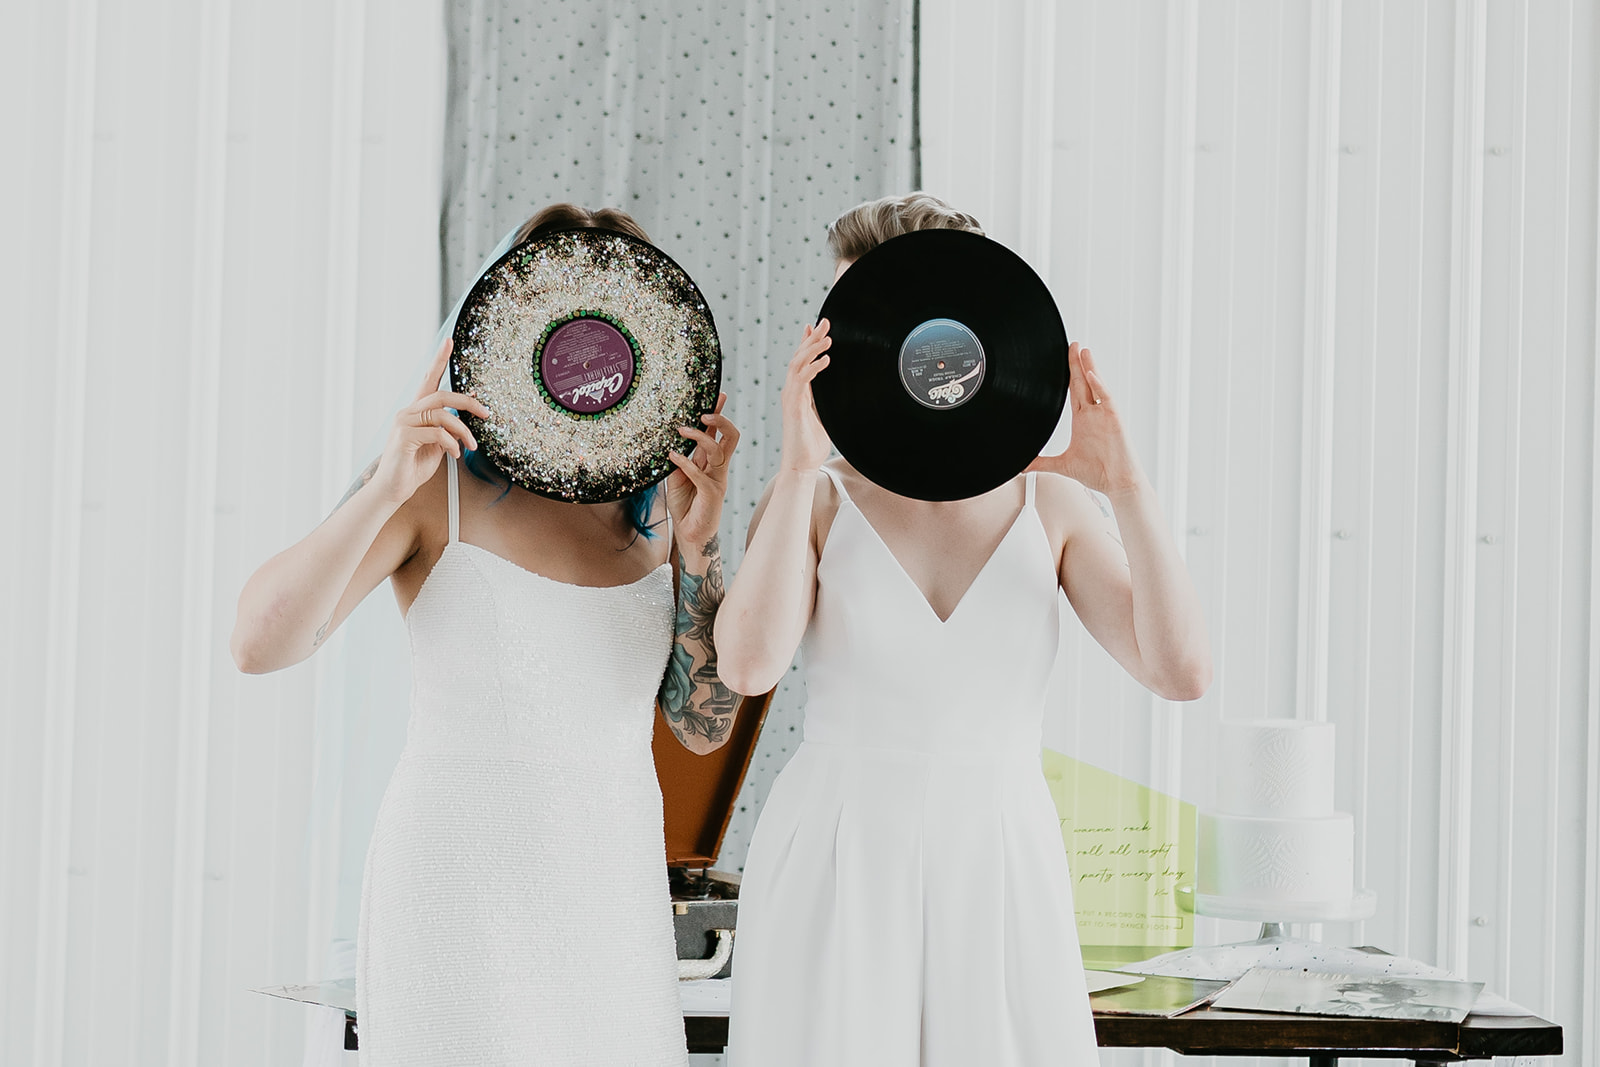 Rocker brides pose with records